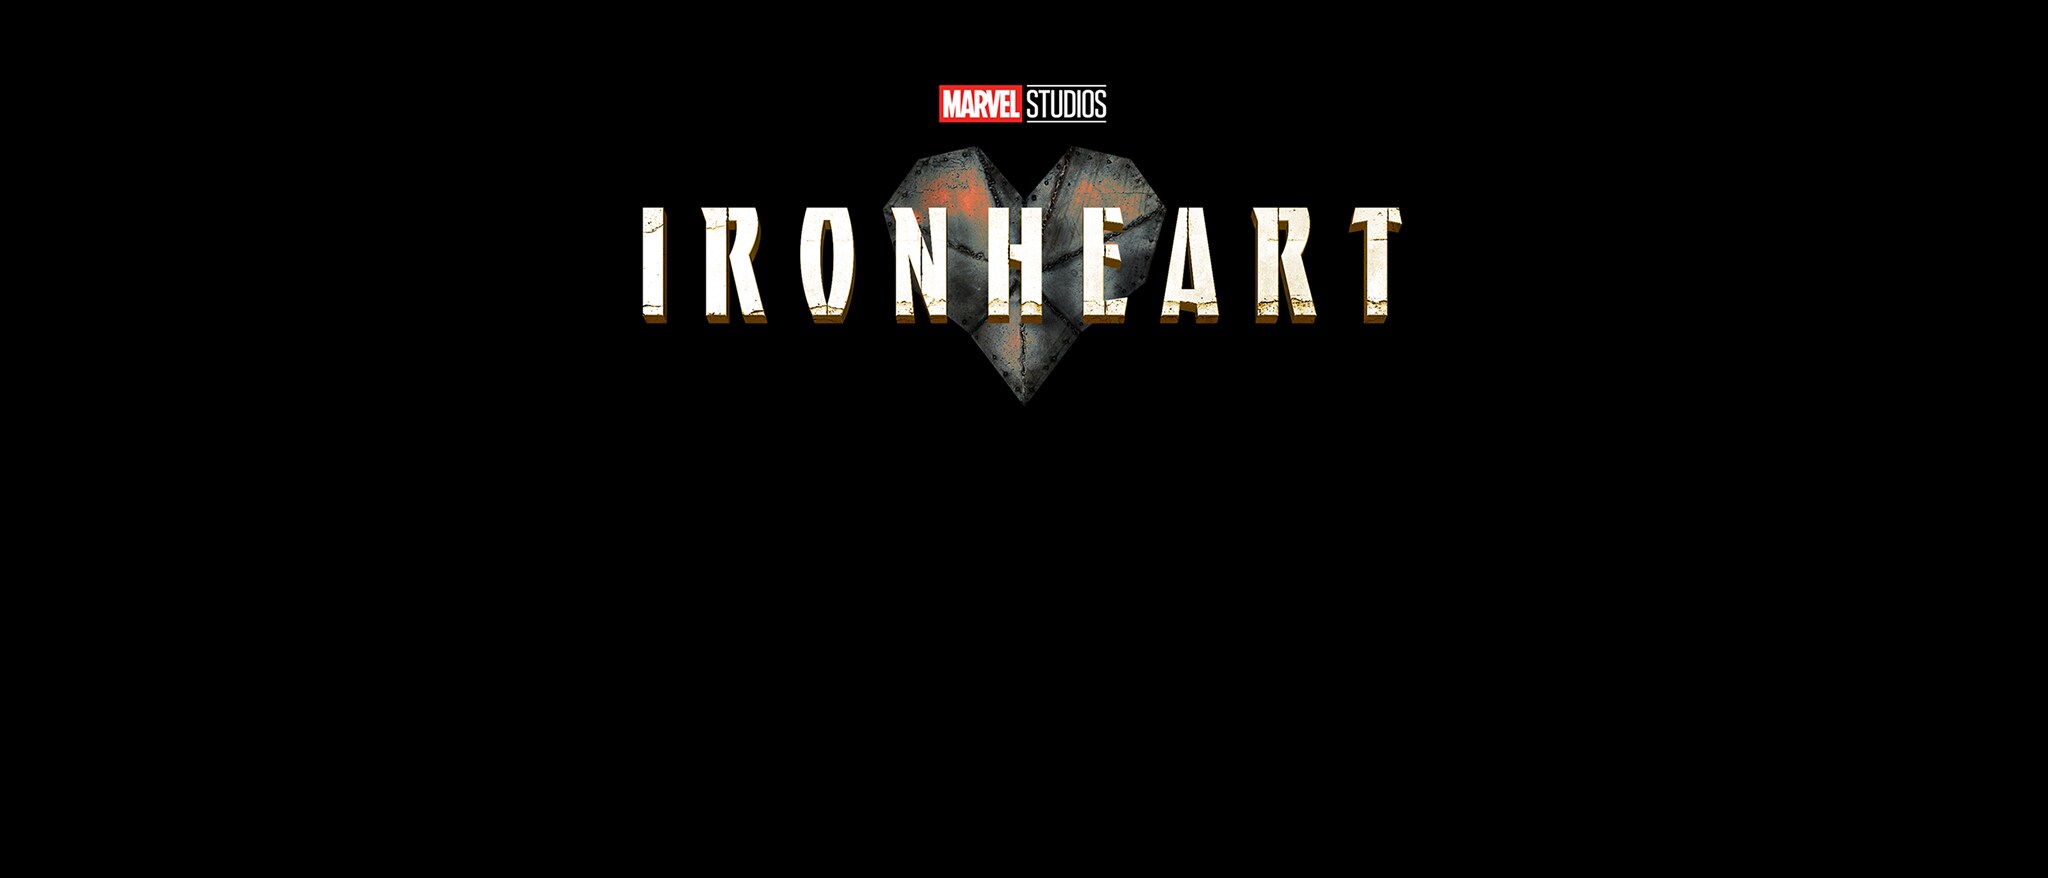 Ironheart - Featured Content Banner